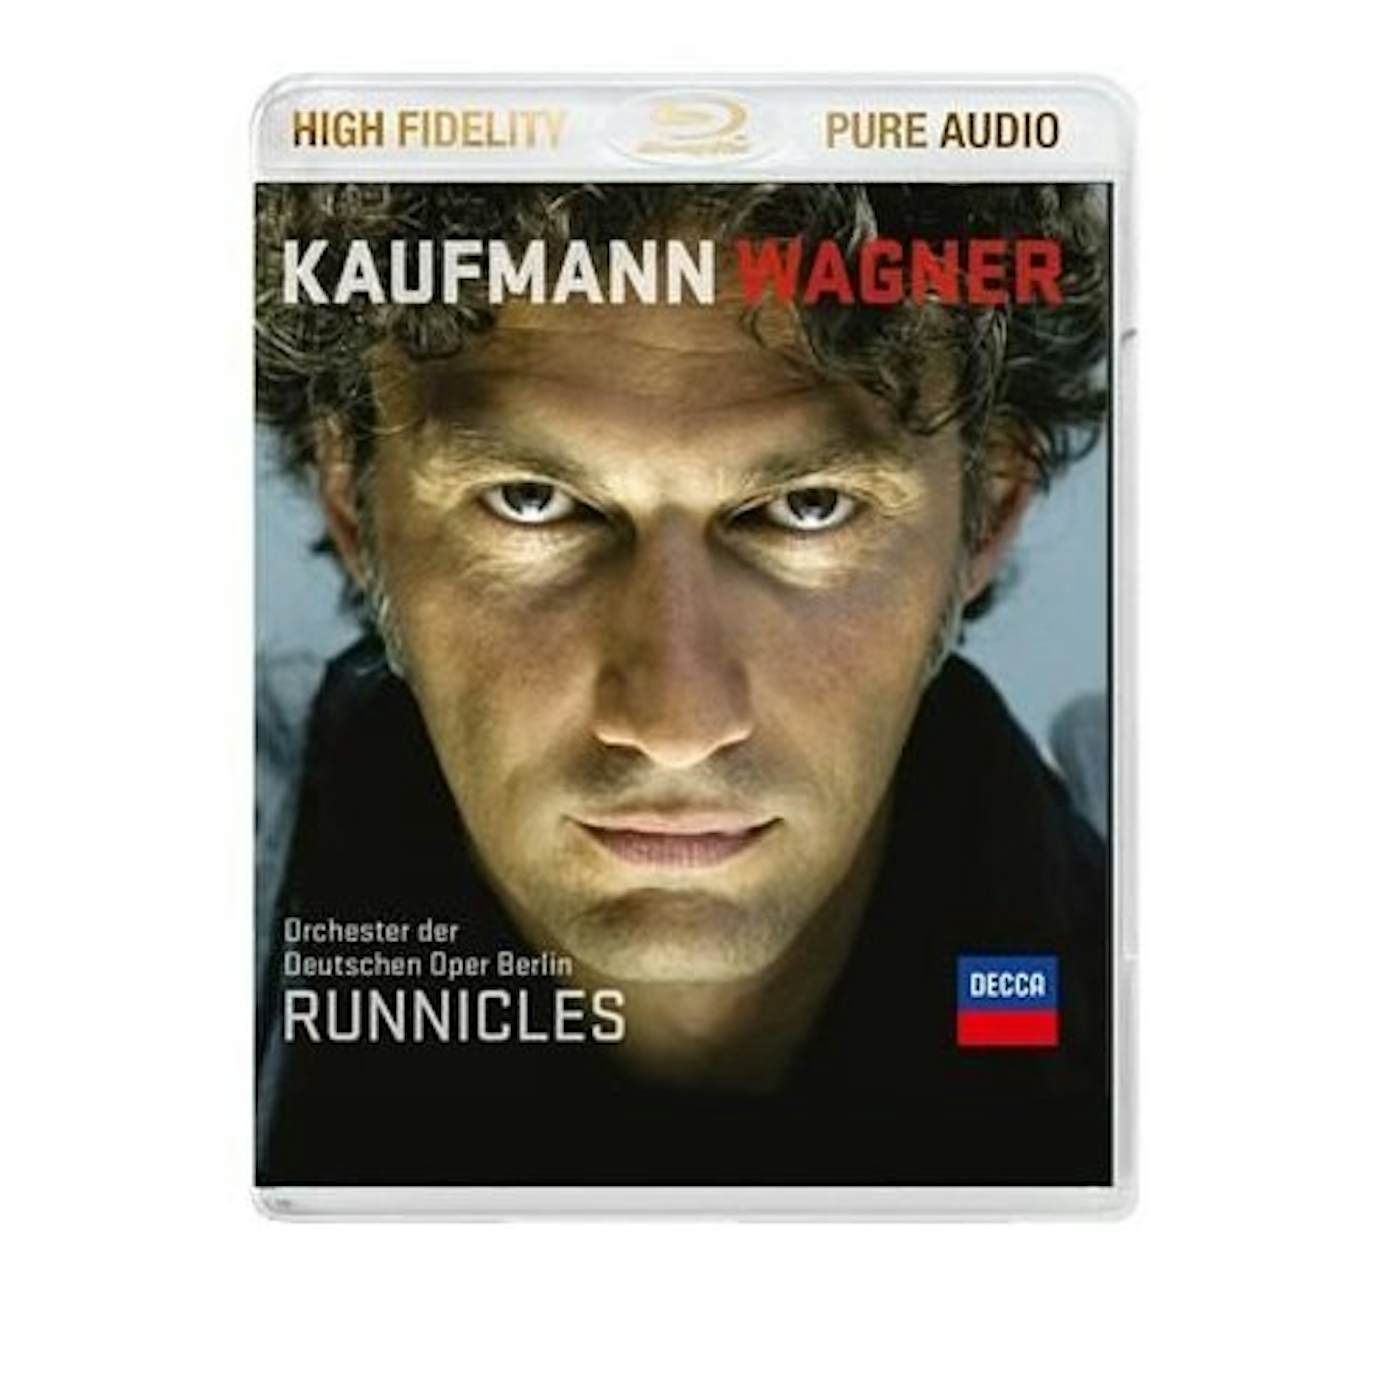 Jonas Kaufmann WAGNER Blu-ray Audio